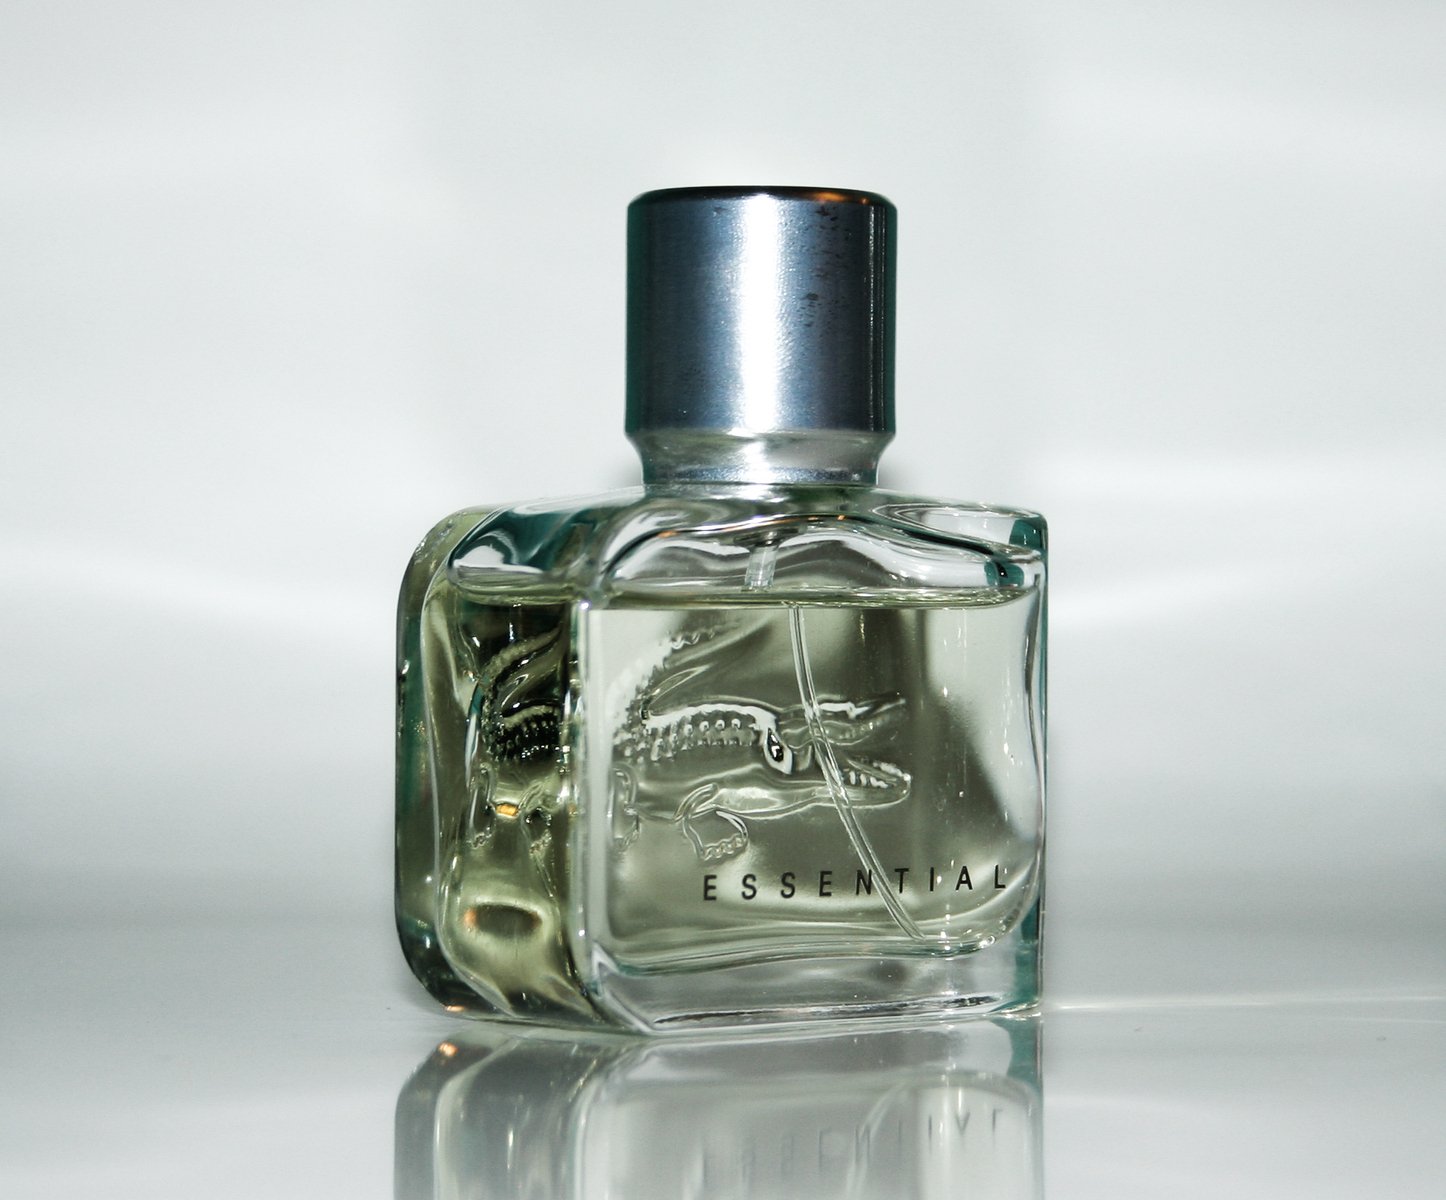 an old - fashioned bottle of espelia perfume